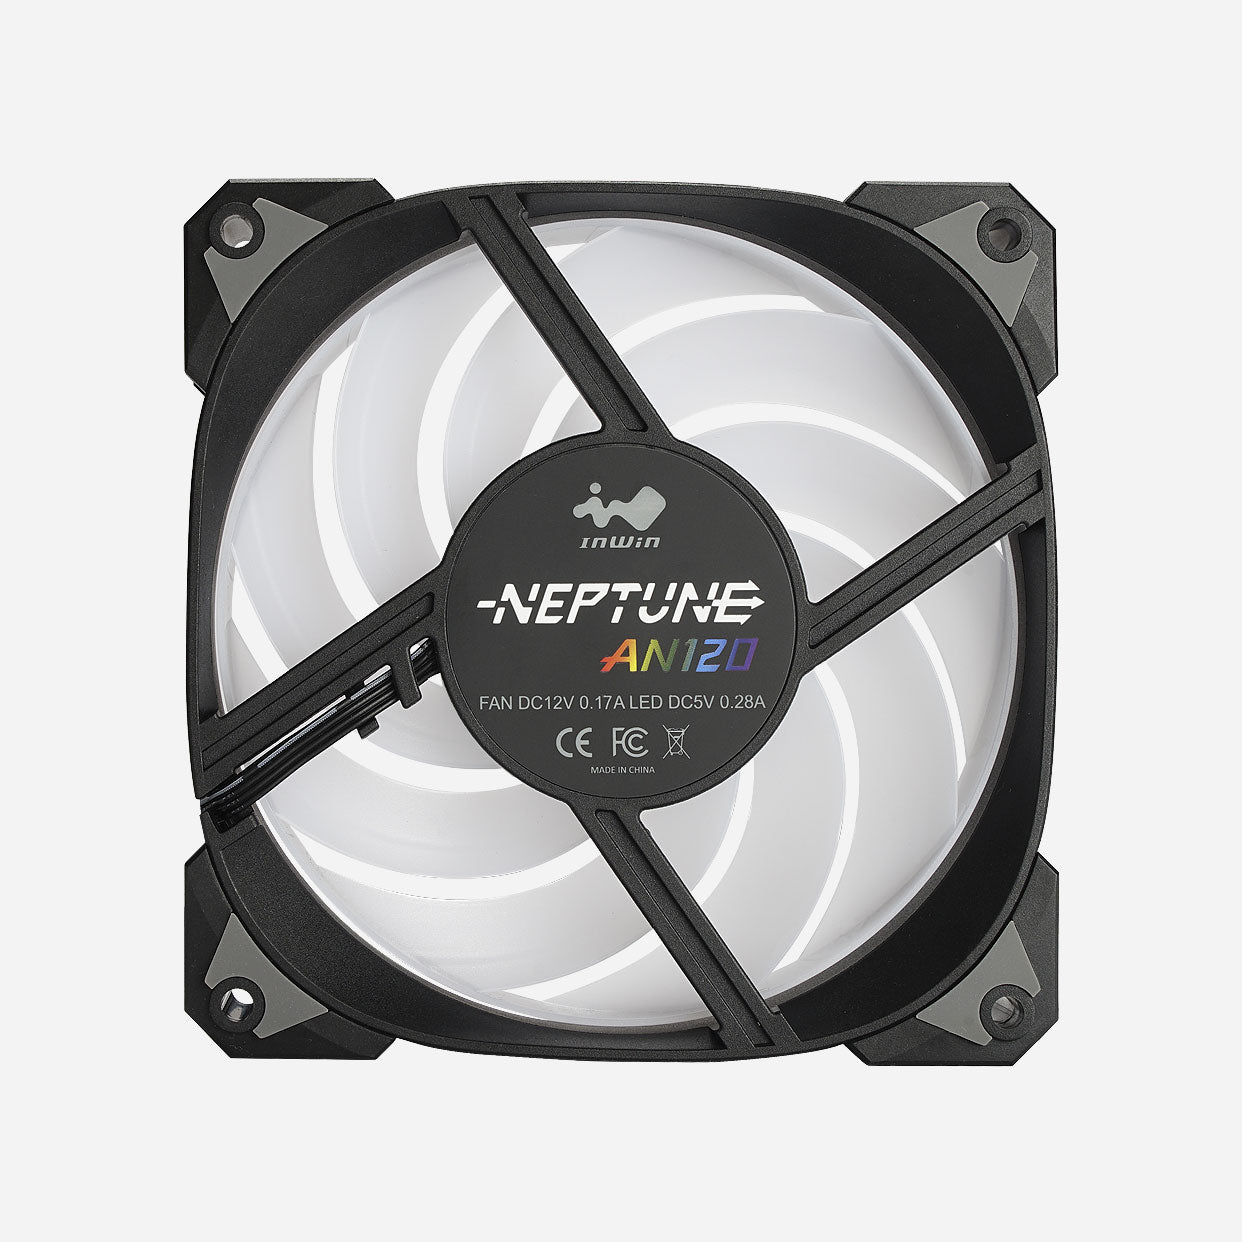 Neptune Turbine Blade Design ARGB 120mm Triple Pack